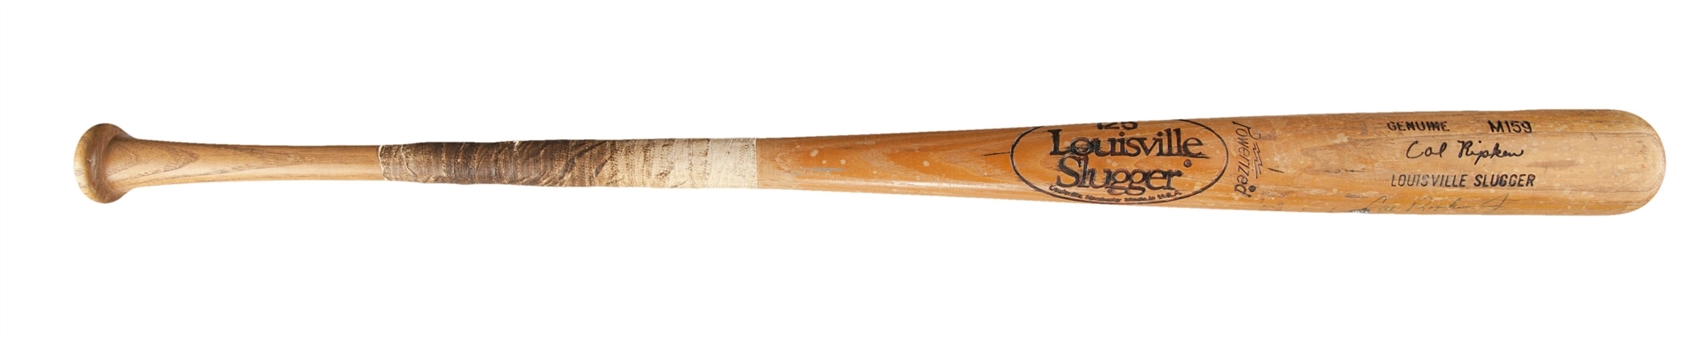 1980 Cal Ripken Jr. Louisville Slugger Minor League Game Used and Signed M159 Model Bat (PSA/DNA GU-8.5)